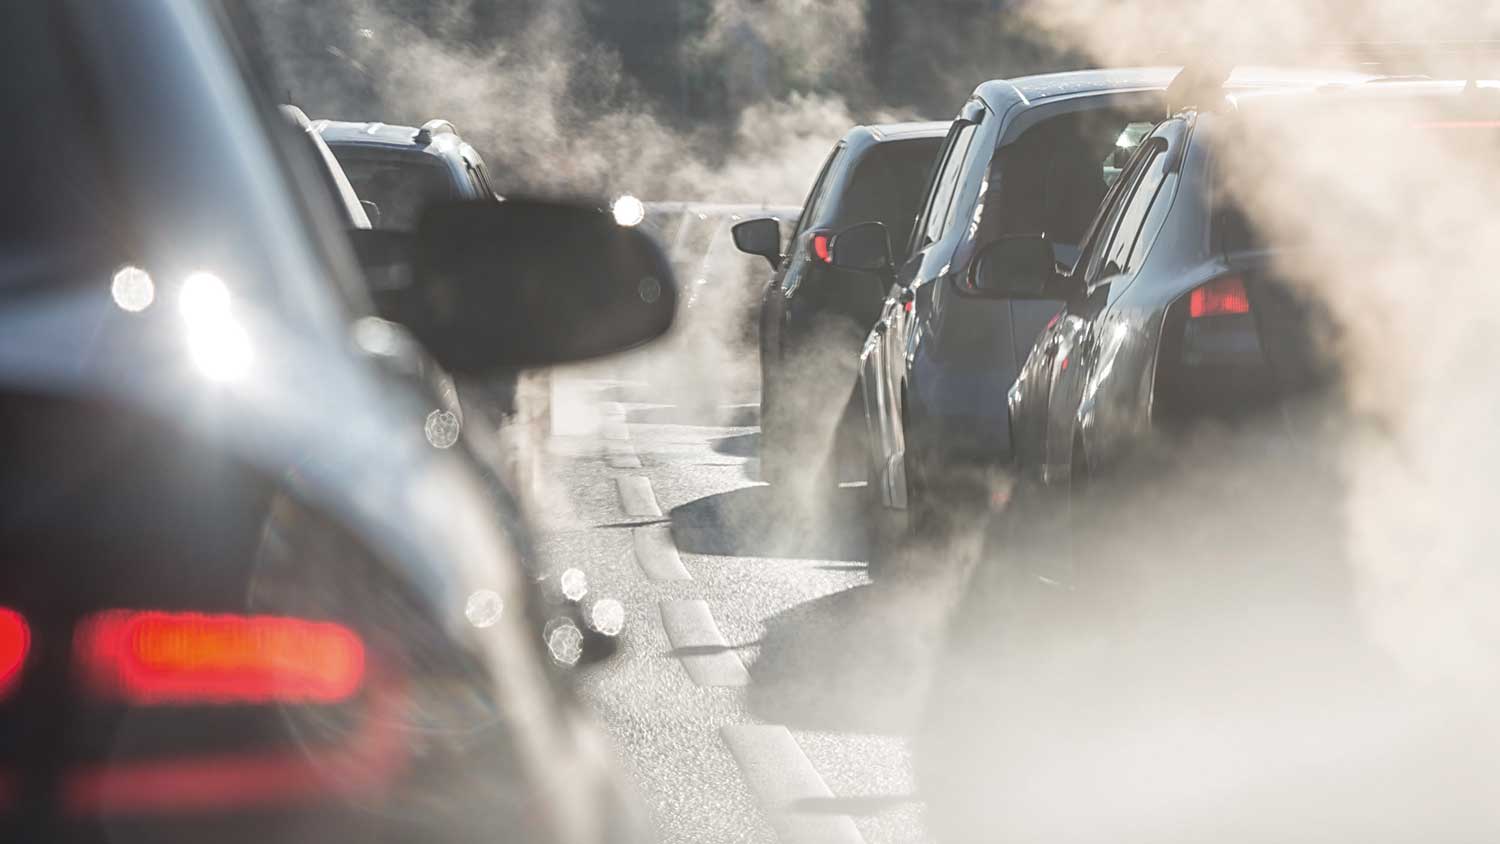 Cars emitting pollution